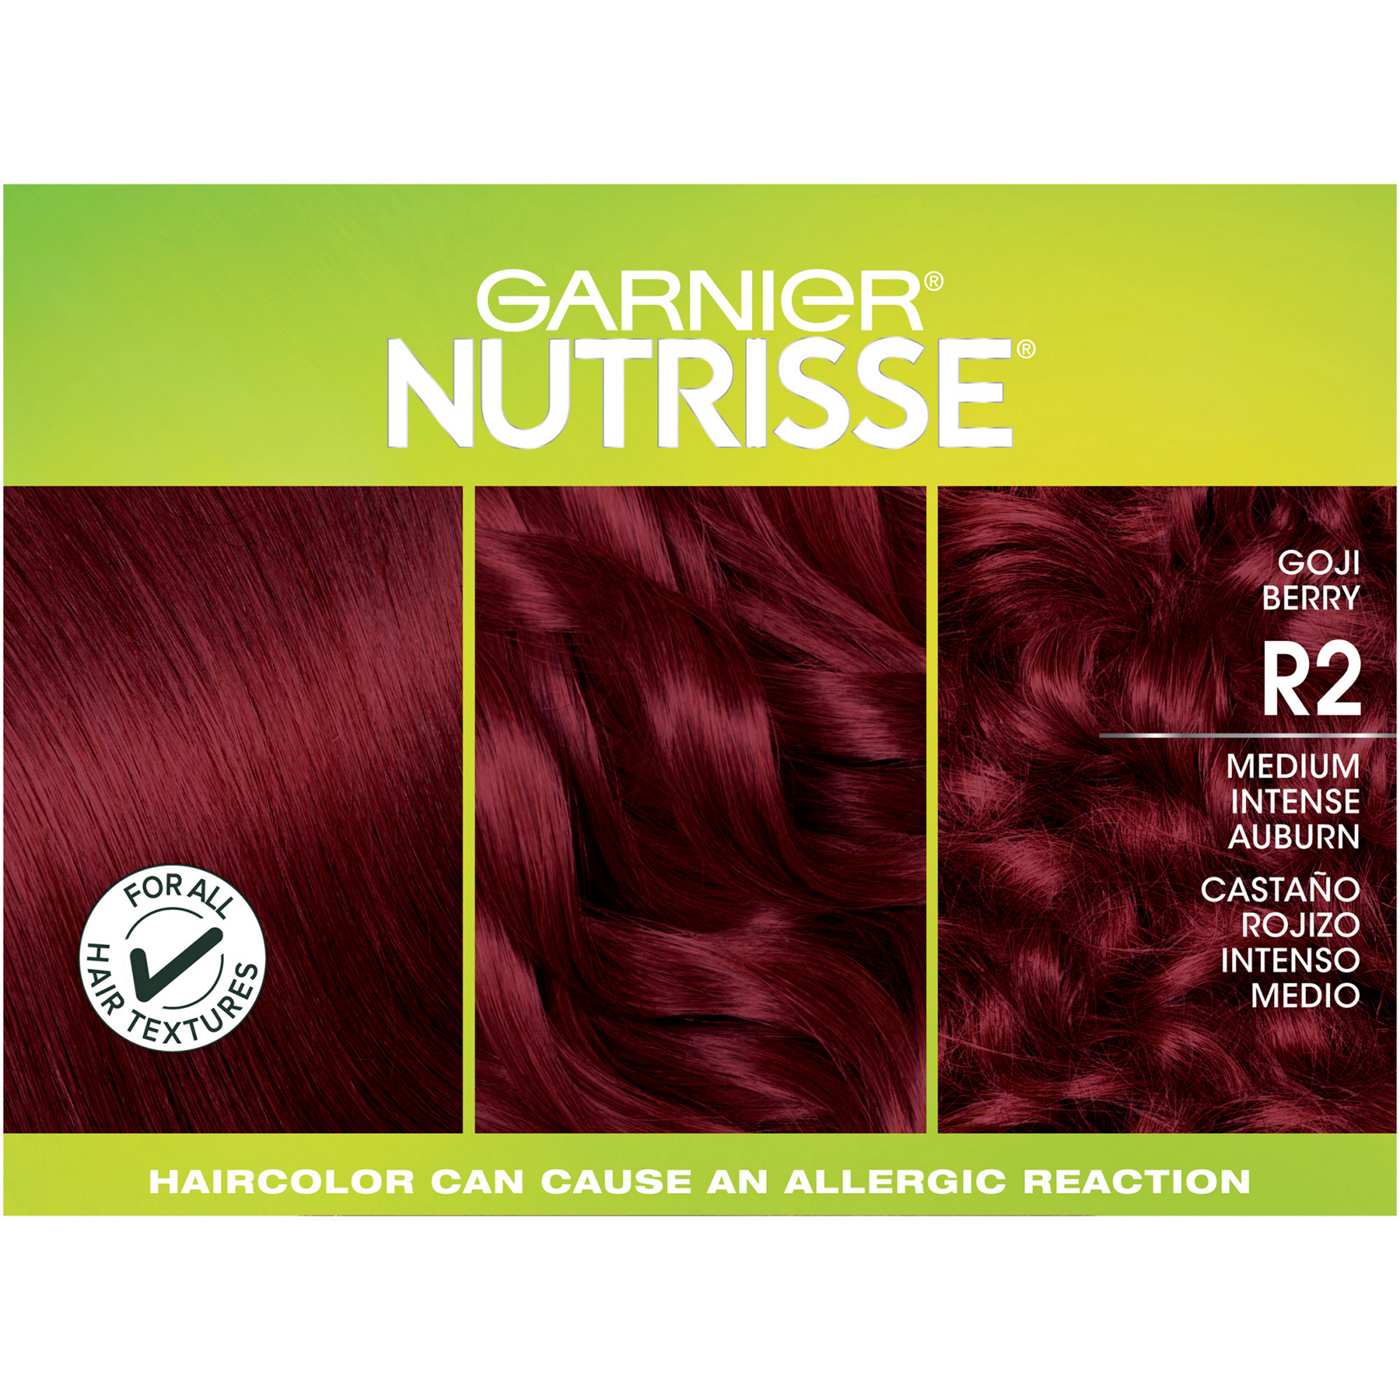 Garnier Nutrisse Ultra Color Nourishing Bold Permanent Hair Color Creme R2 Medium Intense Auburn; image 2 of 9